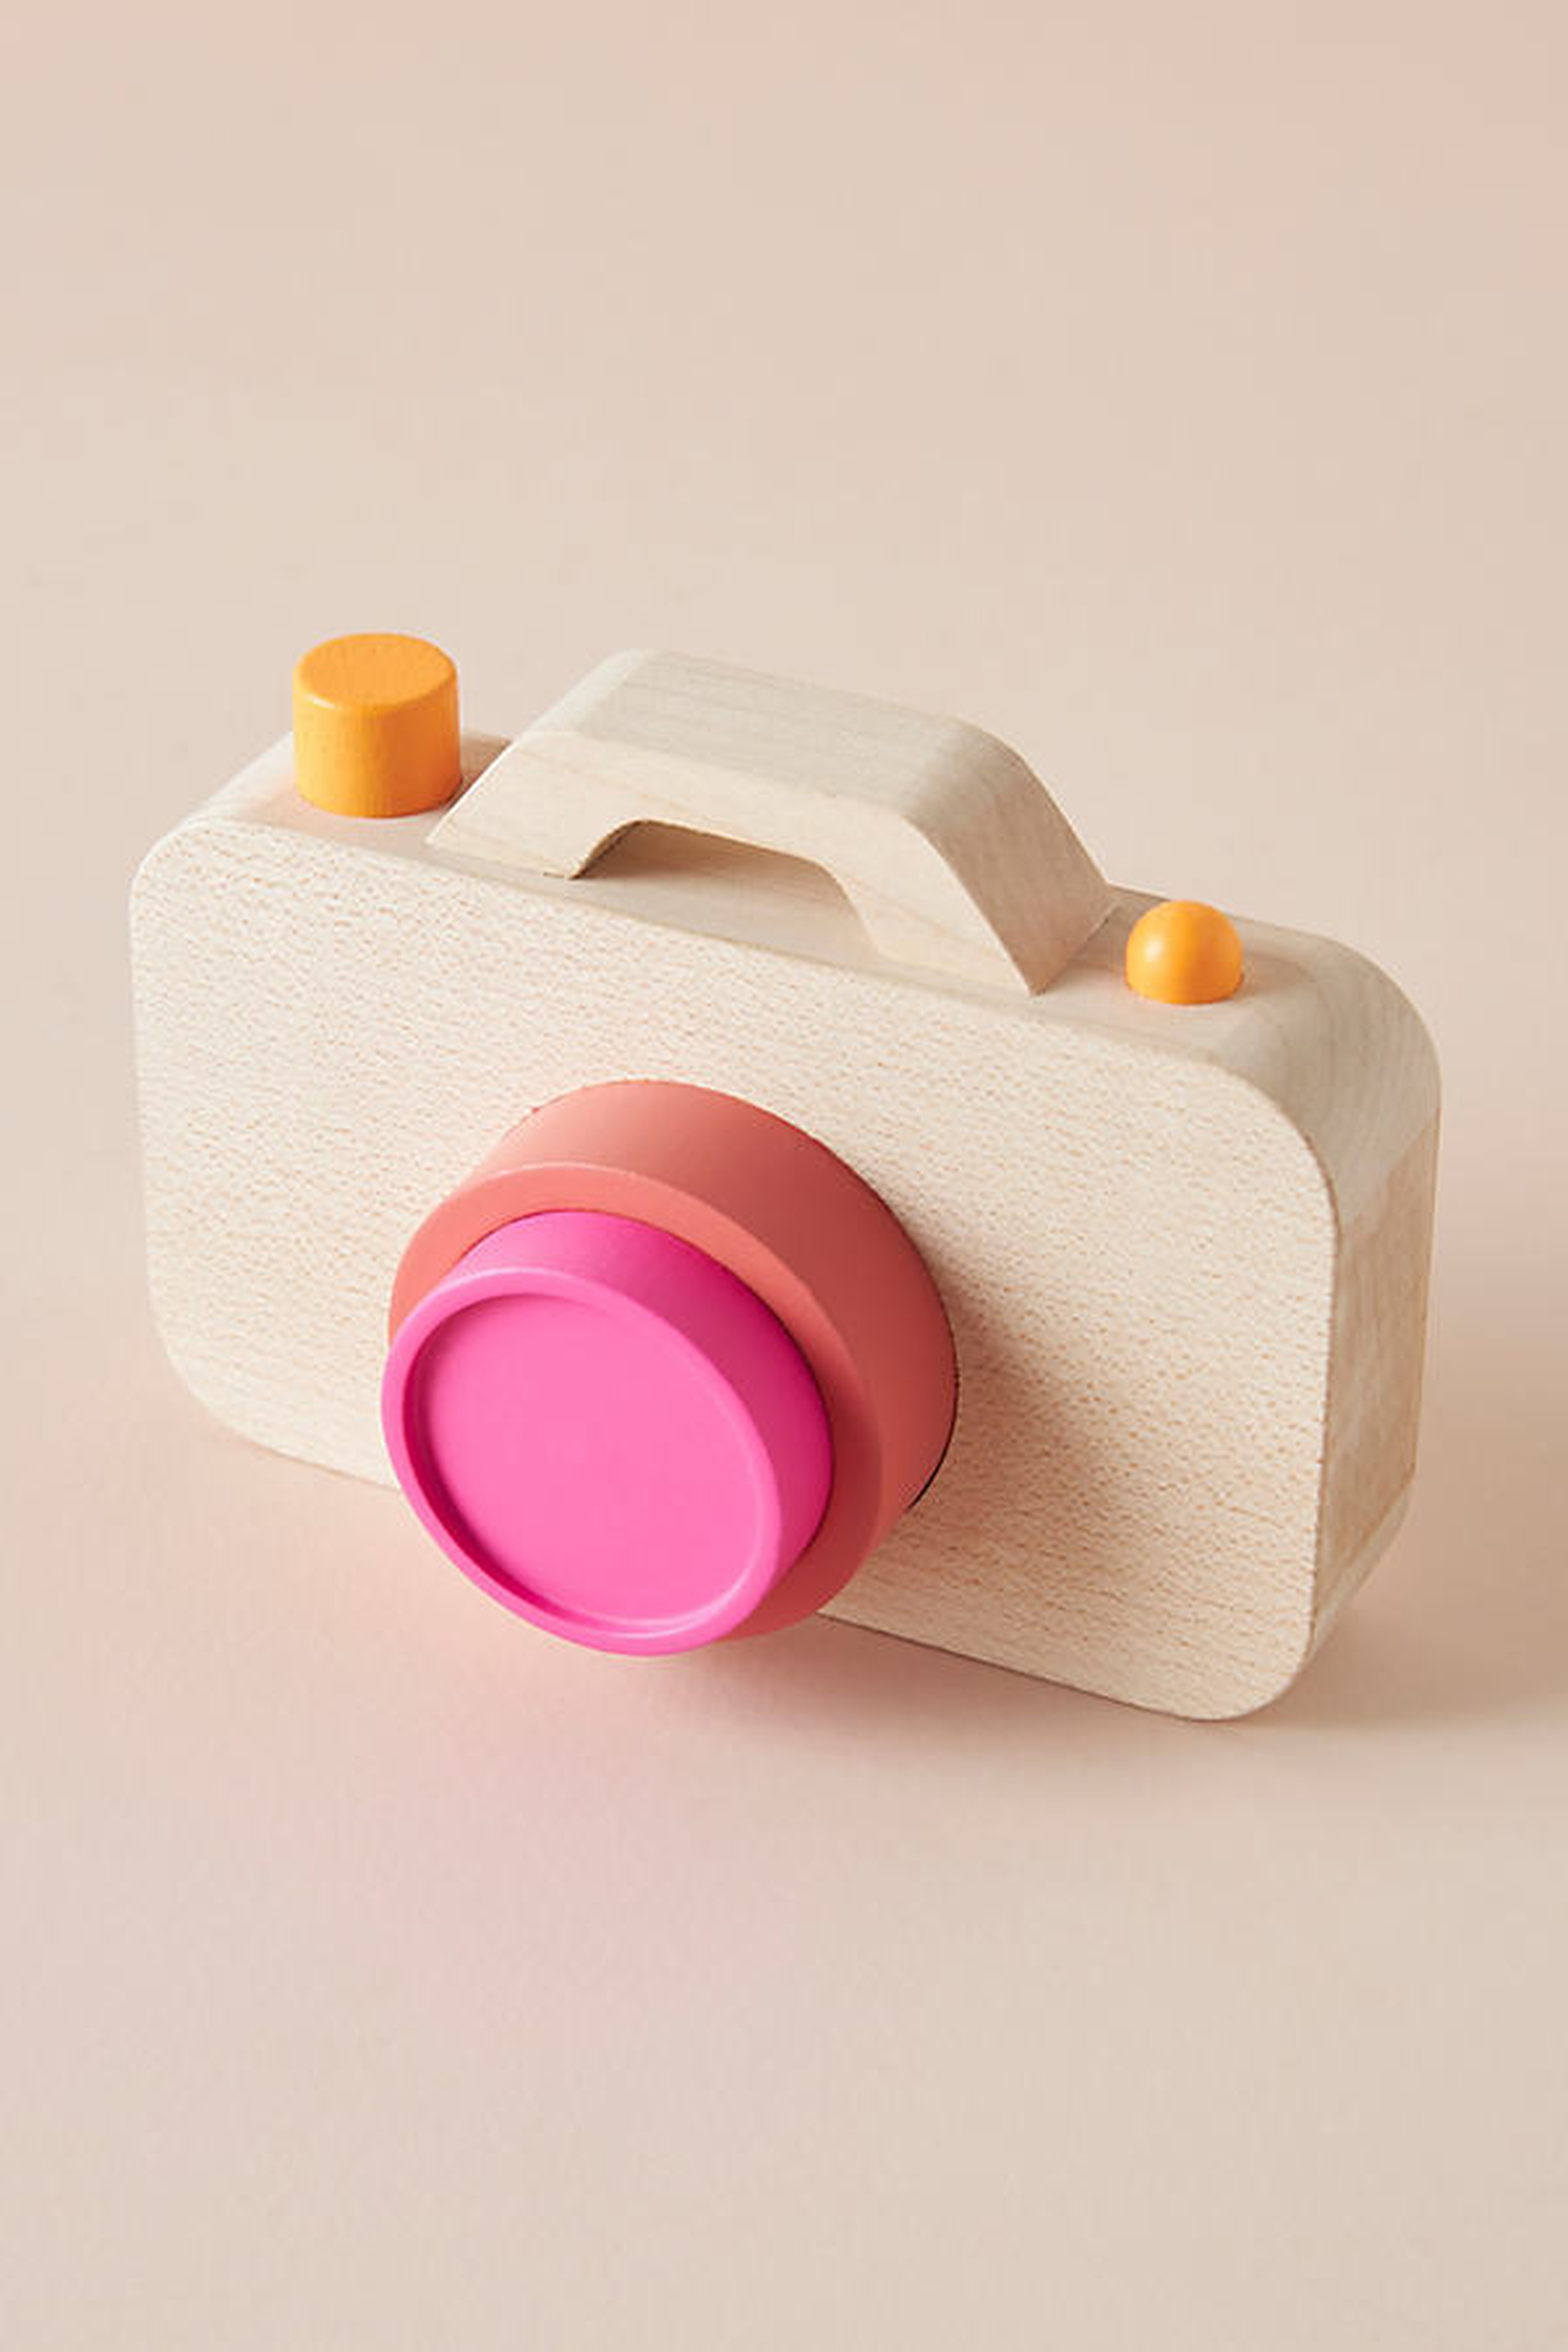 Wooden Camera Toy By Anthropologie in Beige - Anthropologie